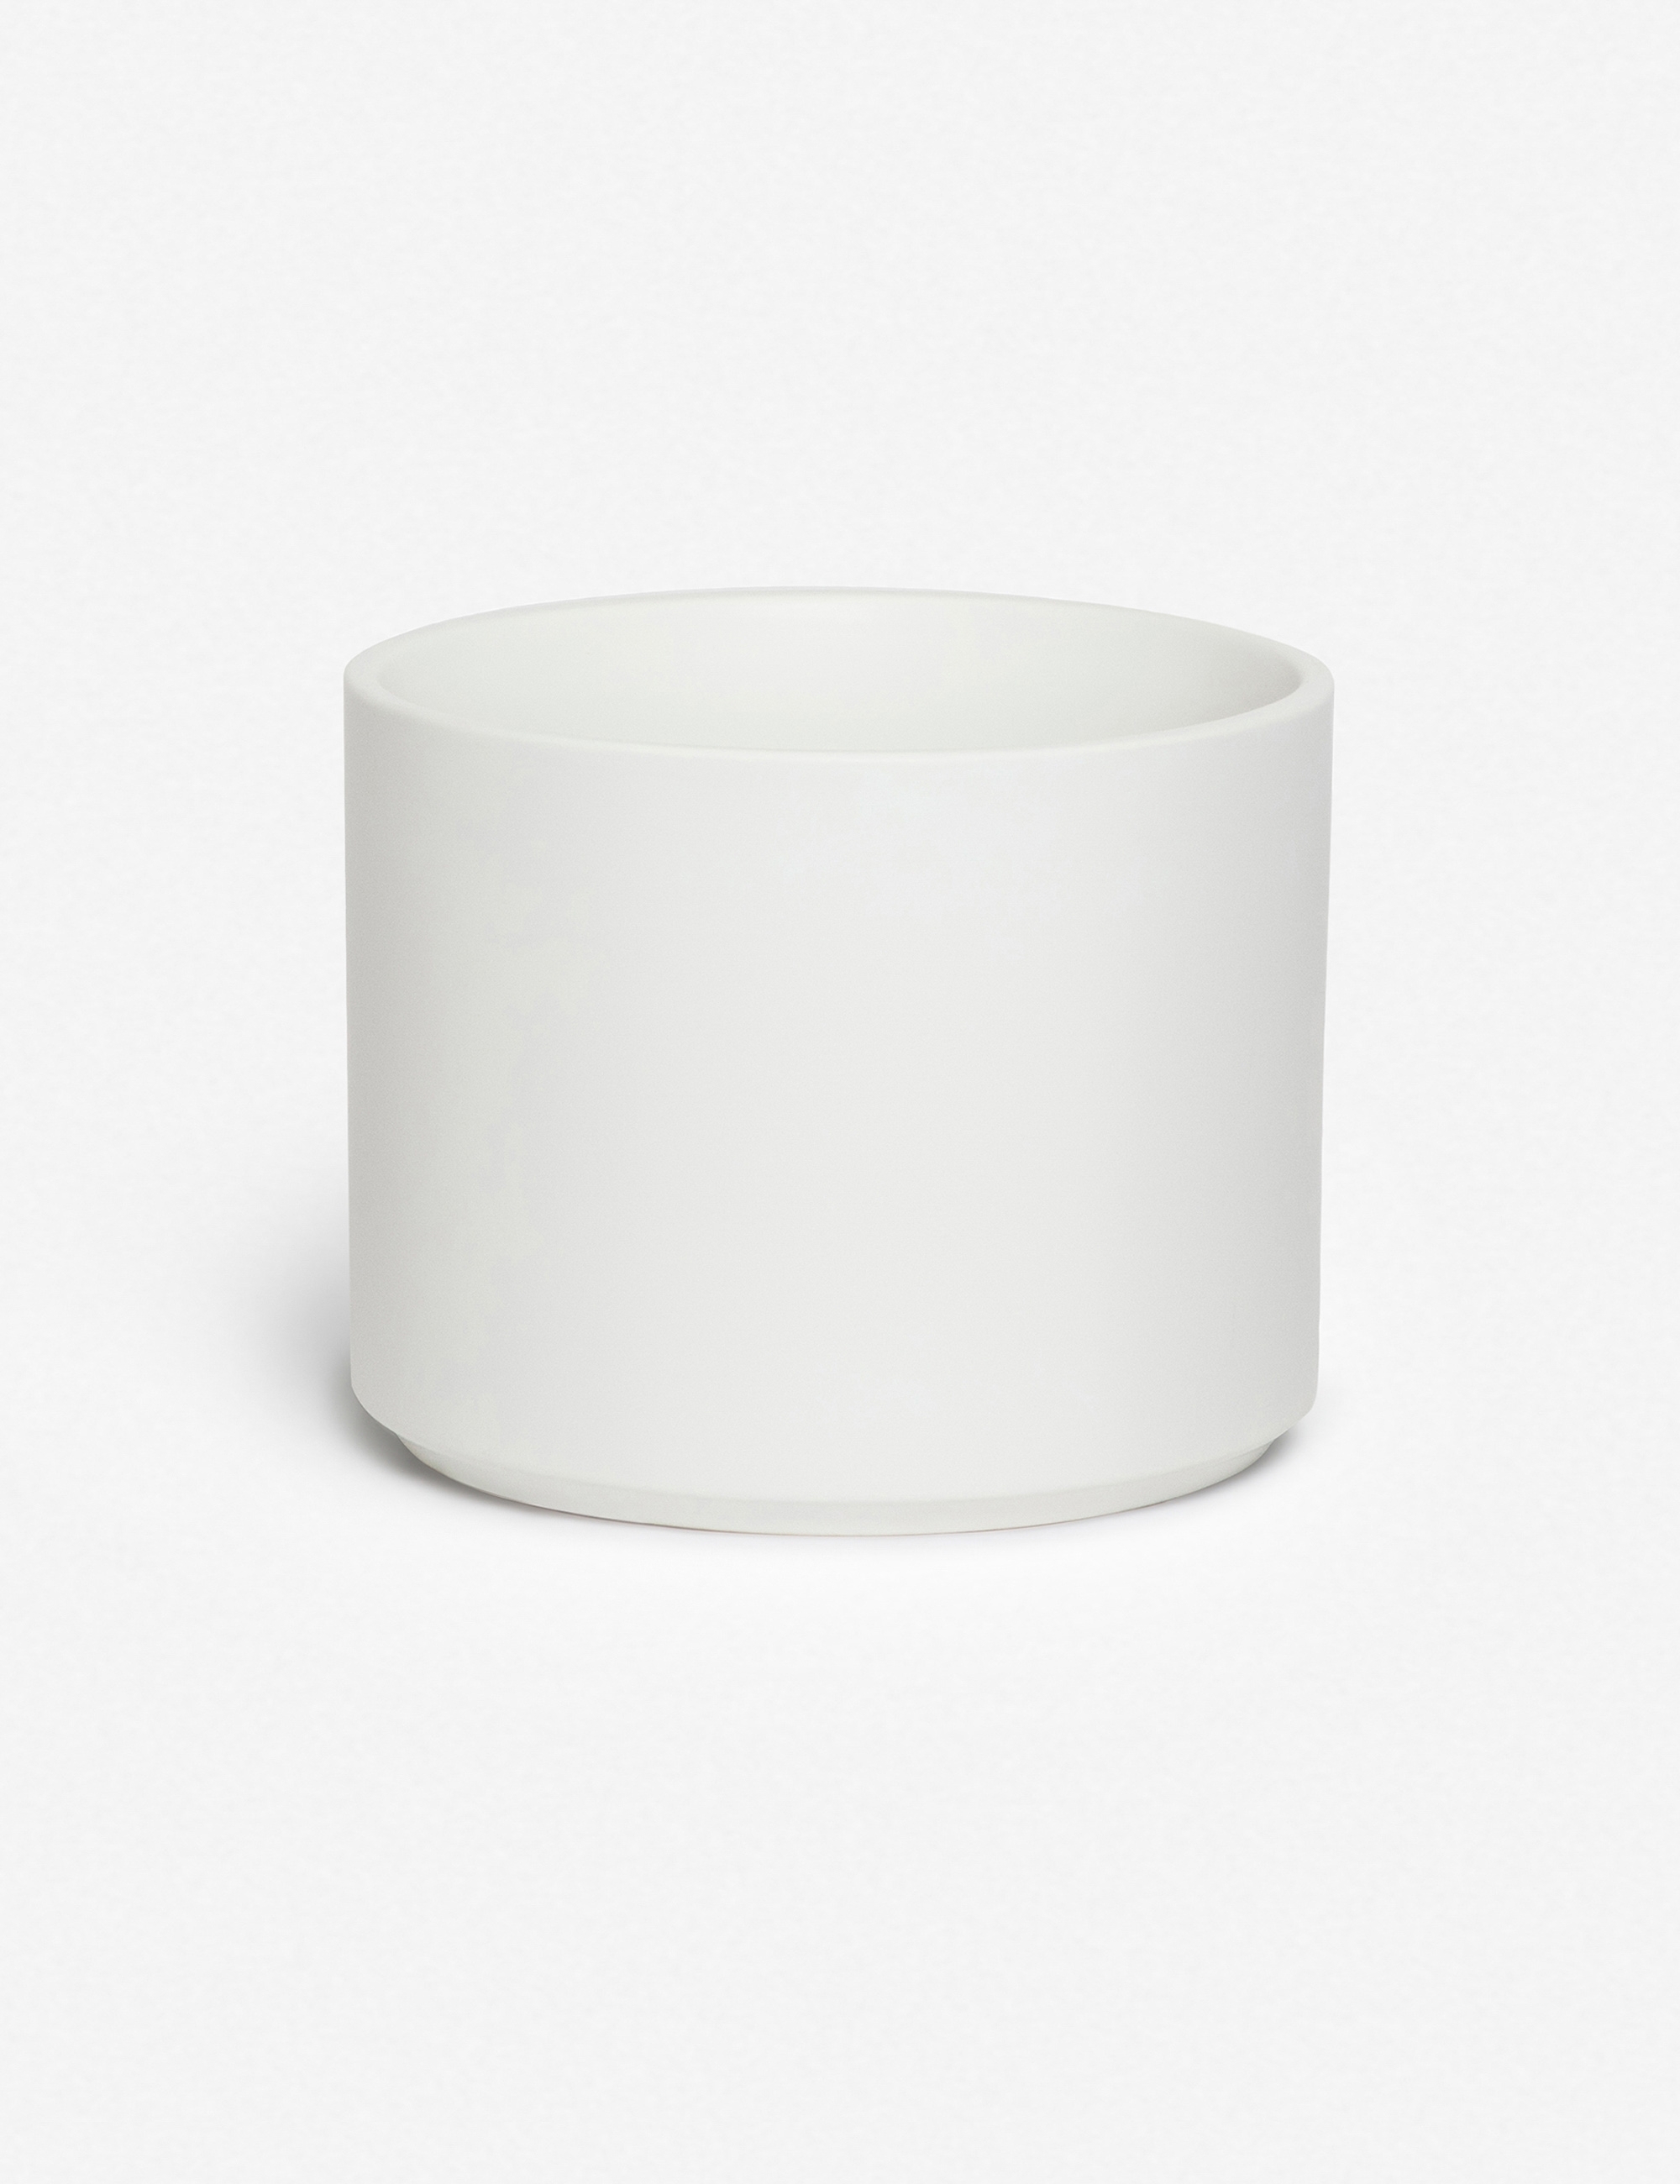 LBE Design Ceramic Planter, White 10"Dia x 9"H - with stand - Image 4